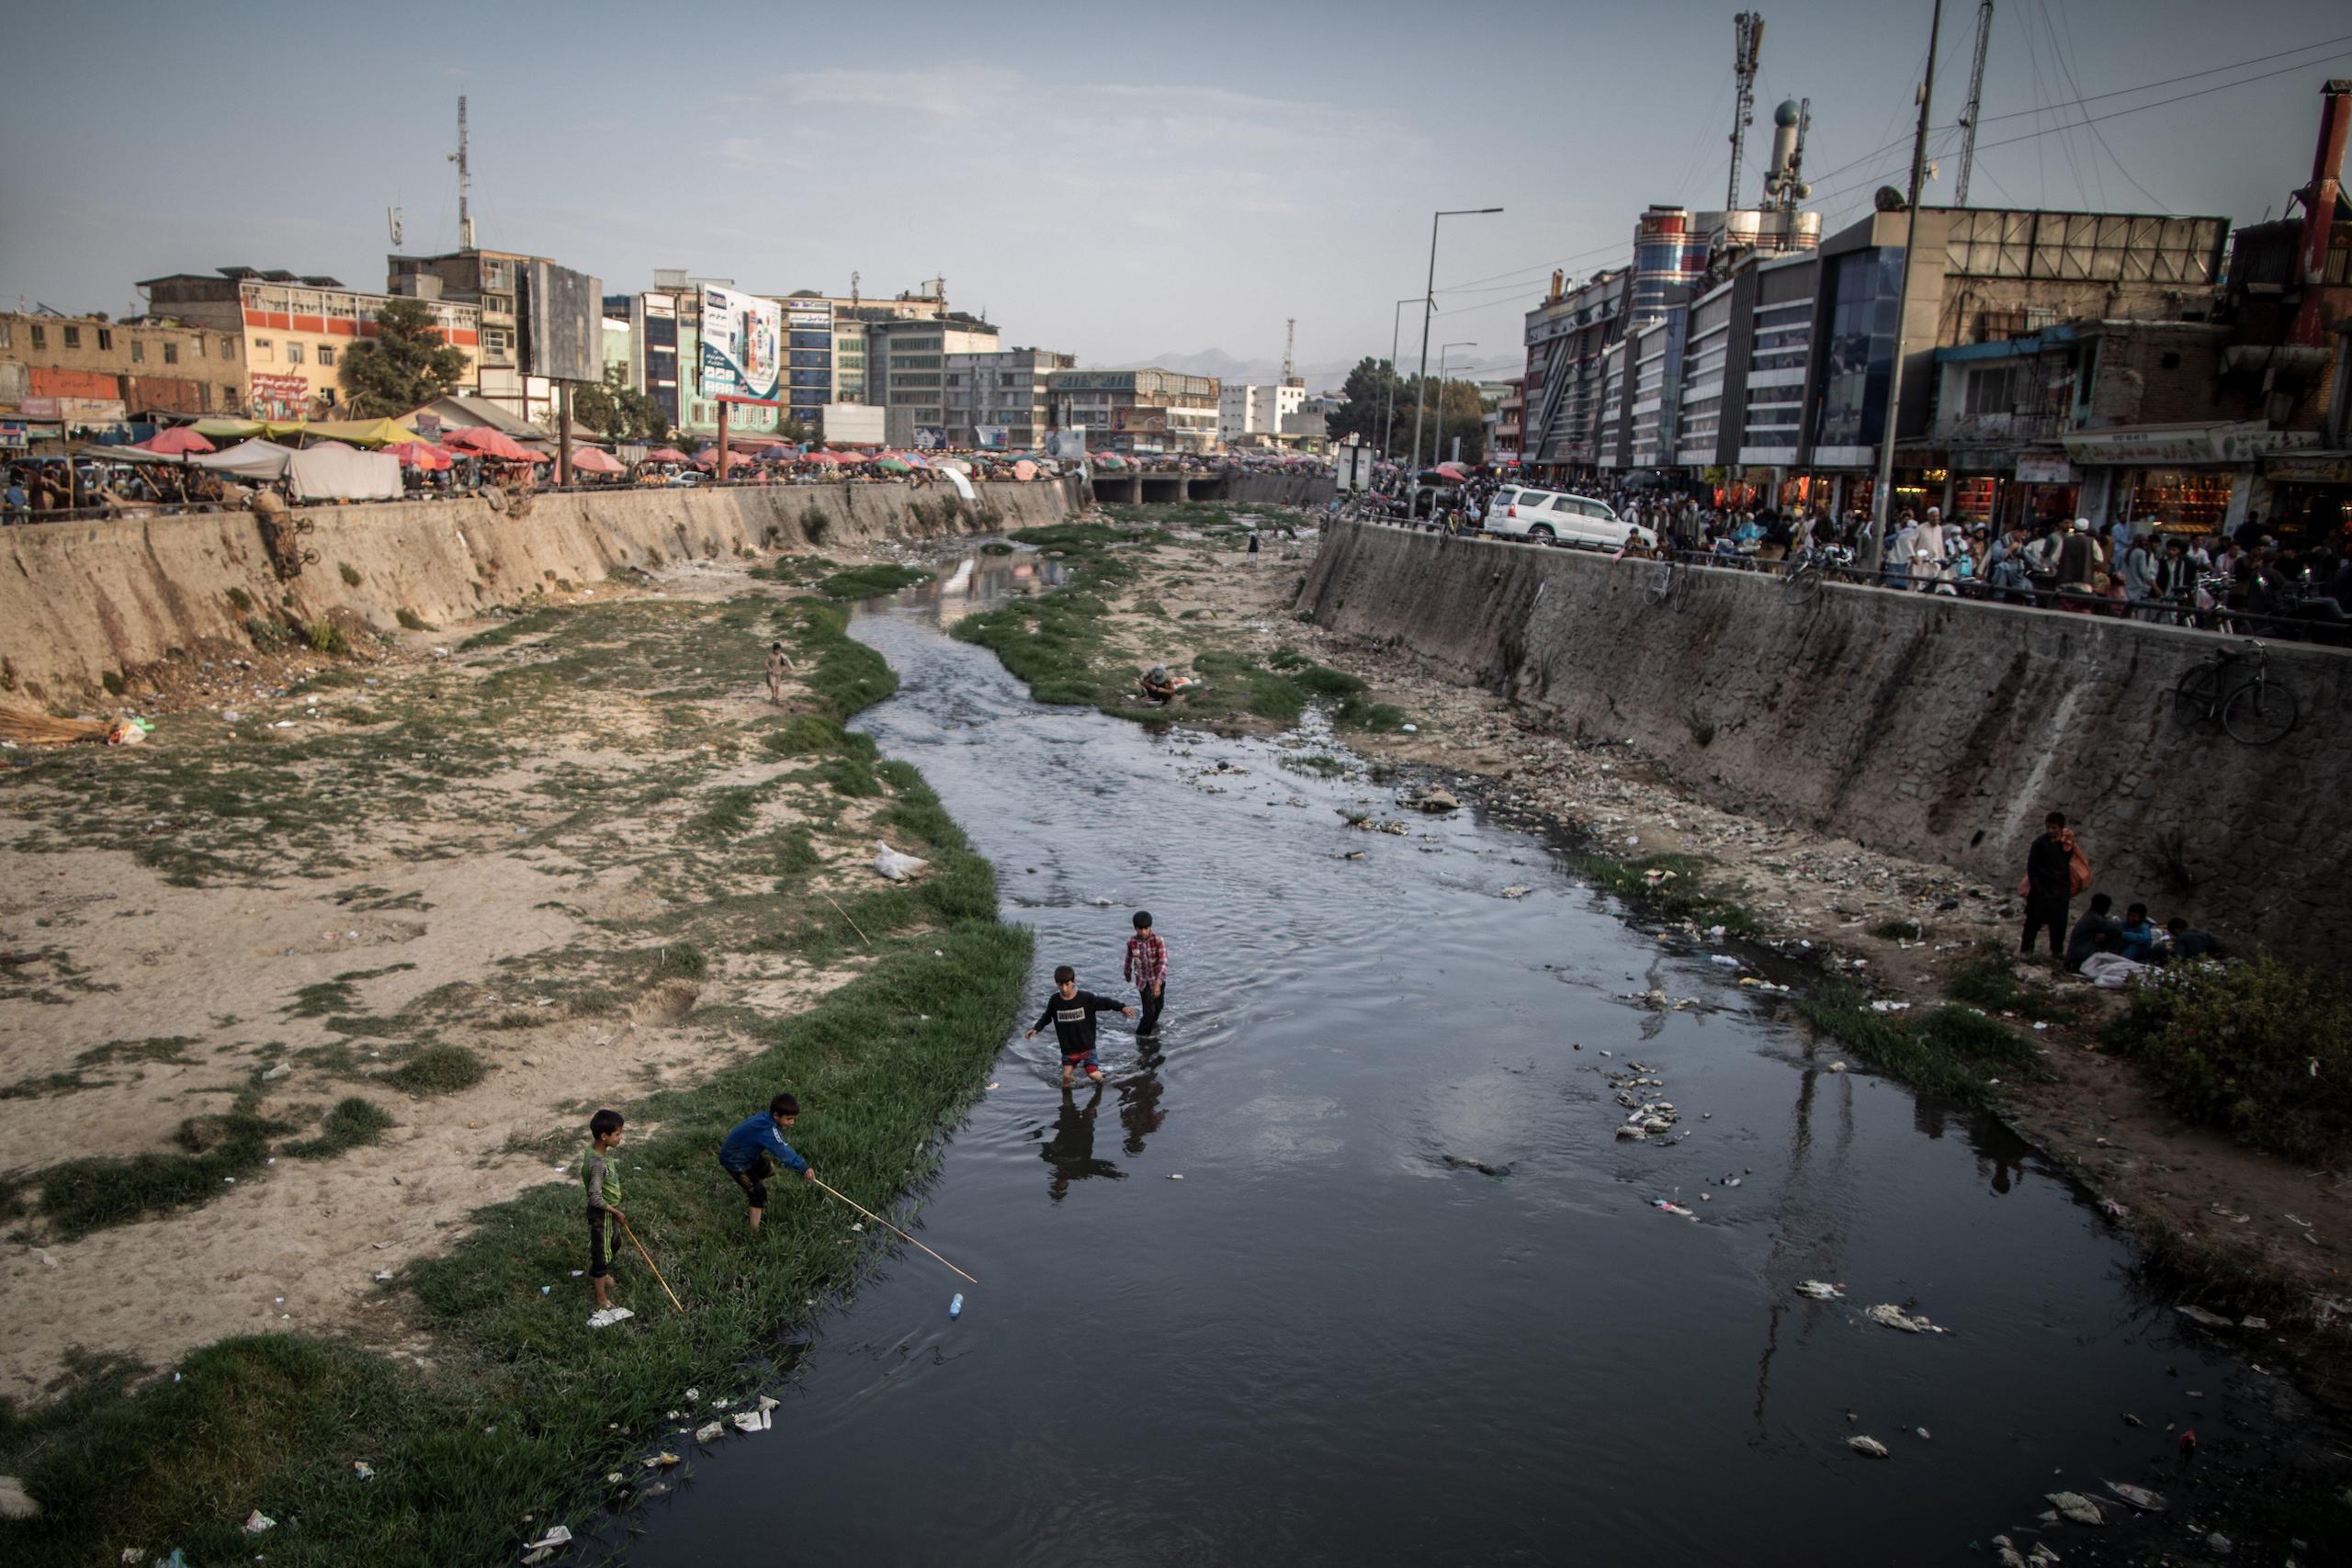 <p>&nbsp;</p> <p><span style="font-weight: 500;">ستمبر 2021 میں، کچھ لڑکے انتہائی آلودہ کچرے سے بھرے دریاۓ کابل سے پلاسٹک کی بوتل نکالنے کے لئے دوڑ لگا رہے ہیں- بوتلوں کو تھوڑے پیسوں میں ری سائیکلنگ کے لئے فروخ کیا جا سکتا ہے۔ (تصویربشکریہ  اولیور ویکن / الامی)</span></p>